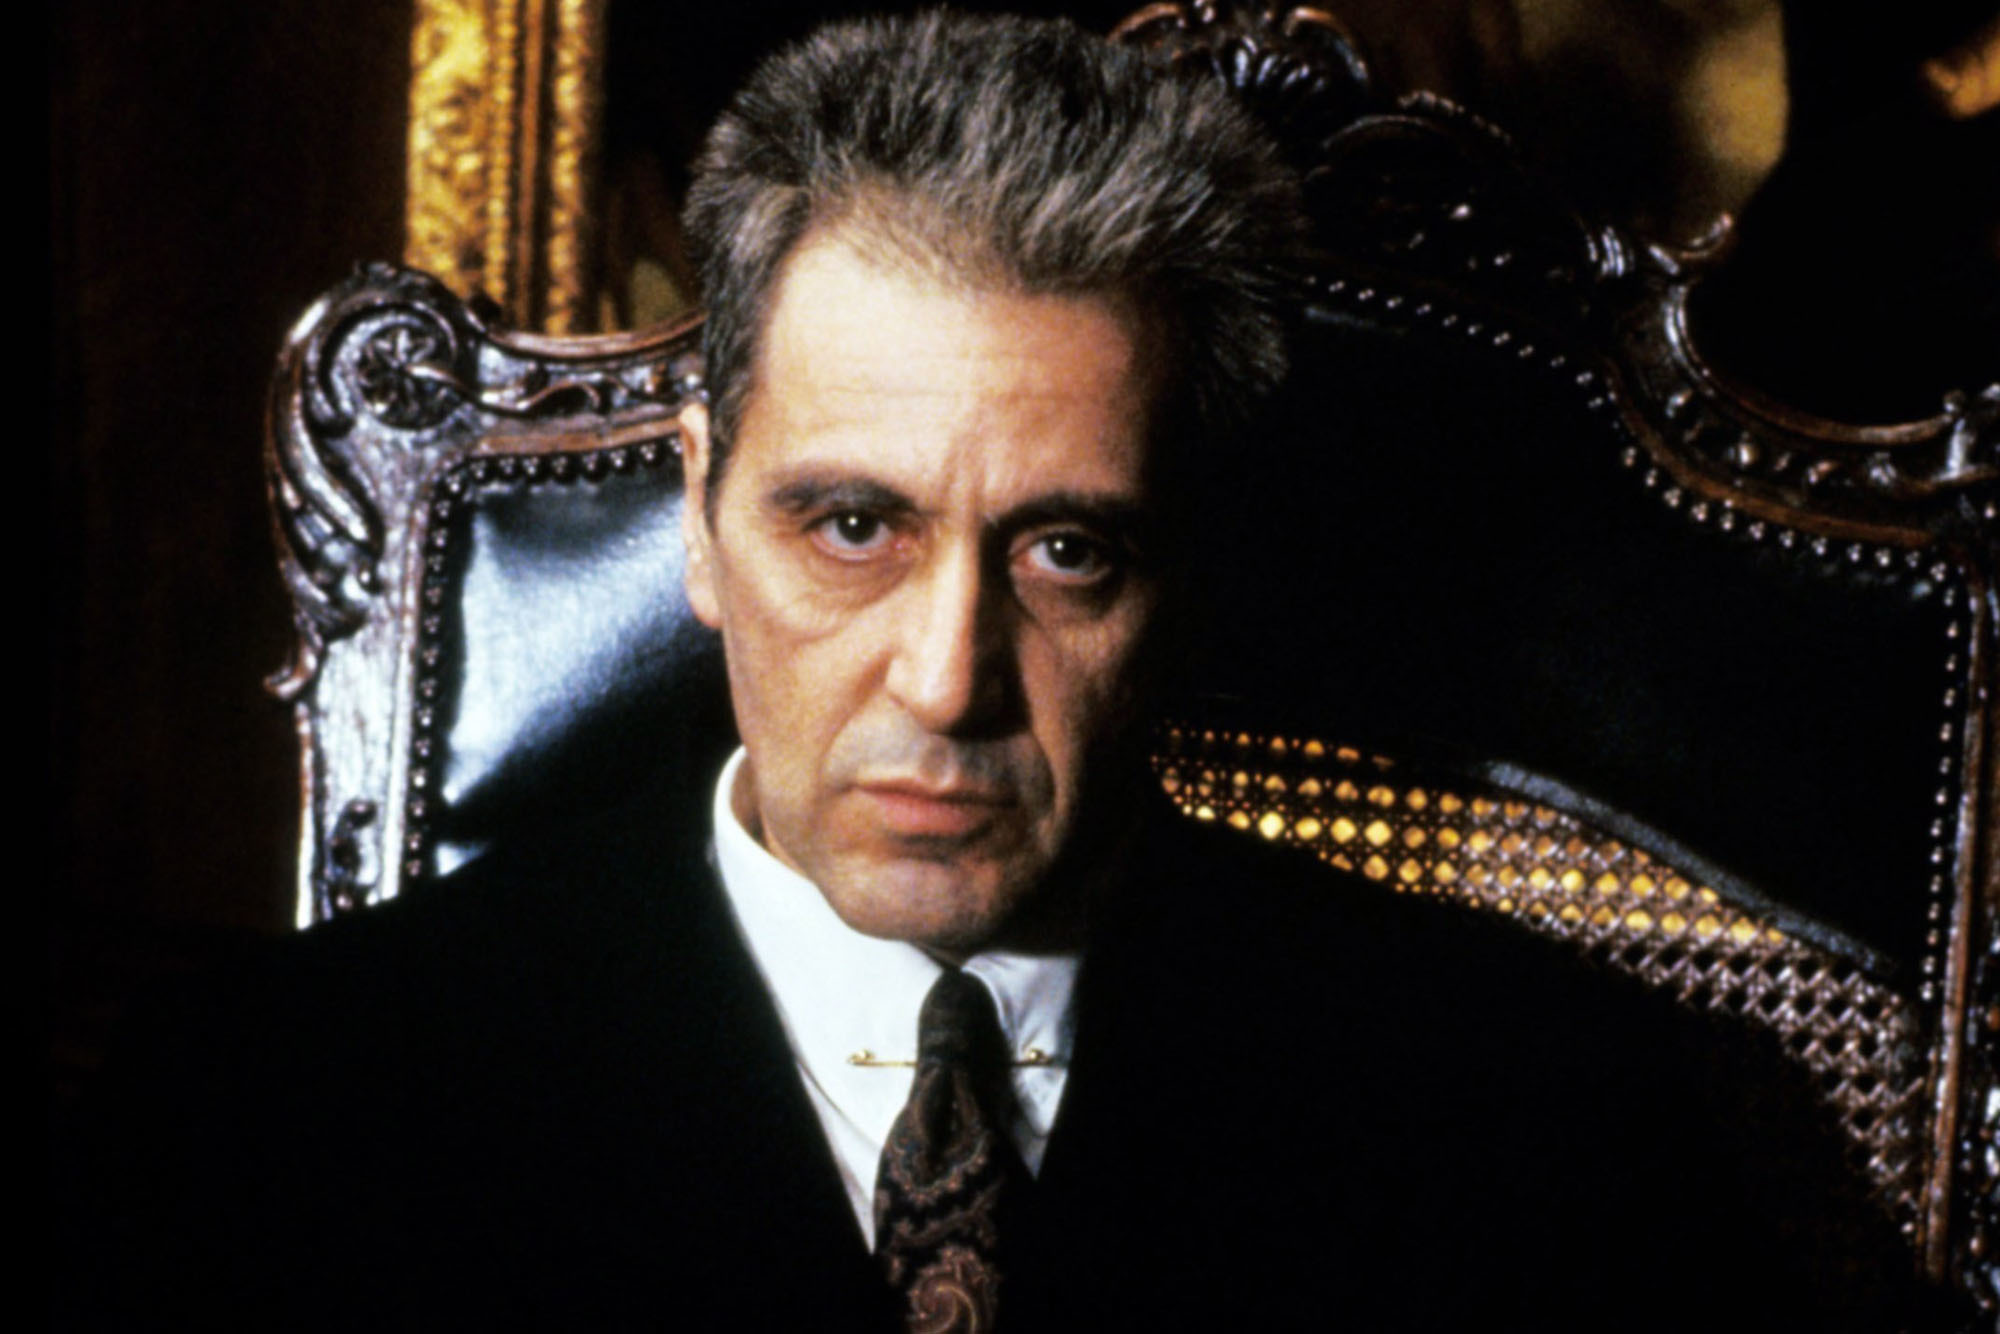 Al Pacino in The Godfather Part III (1990)